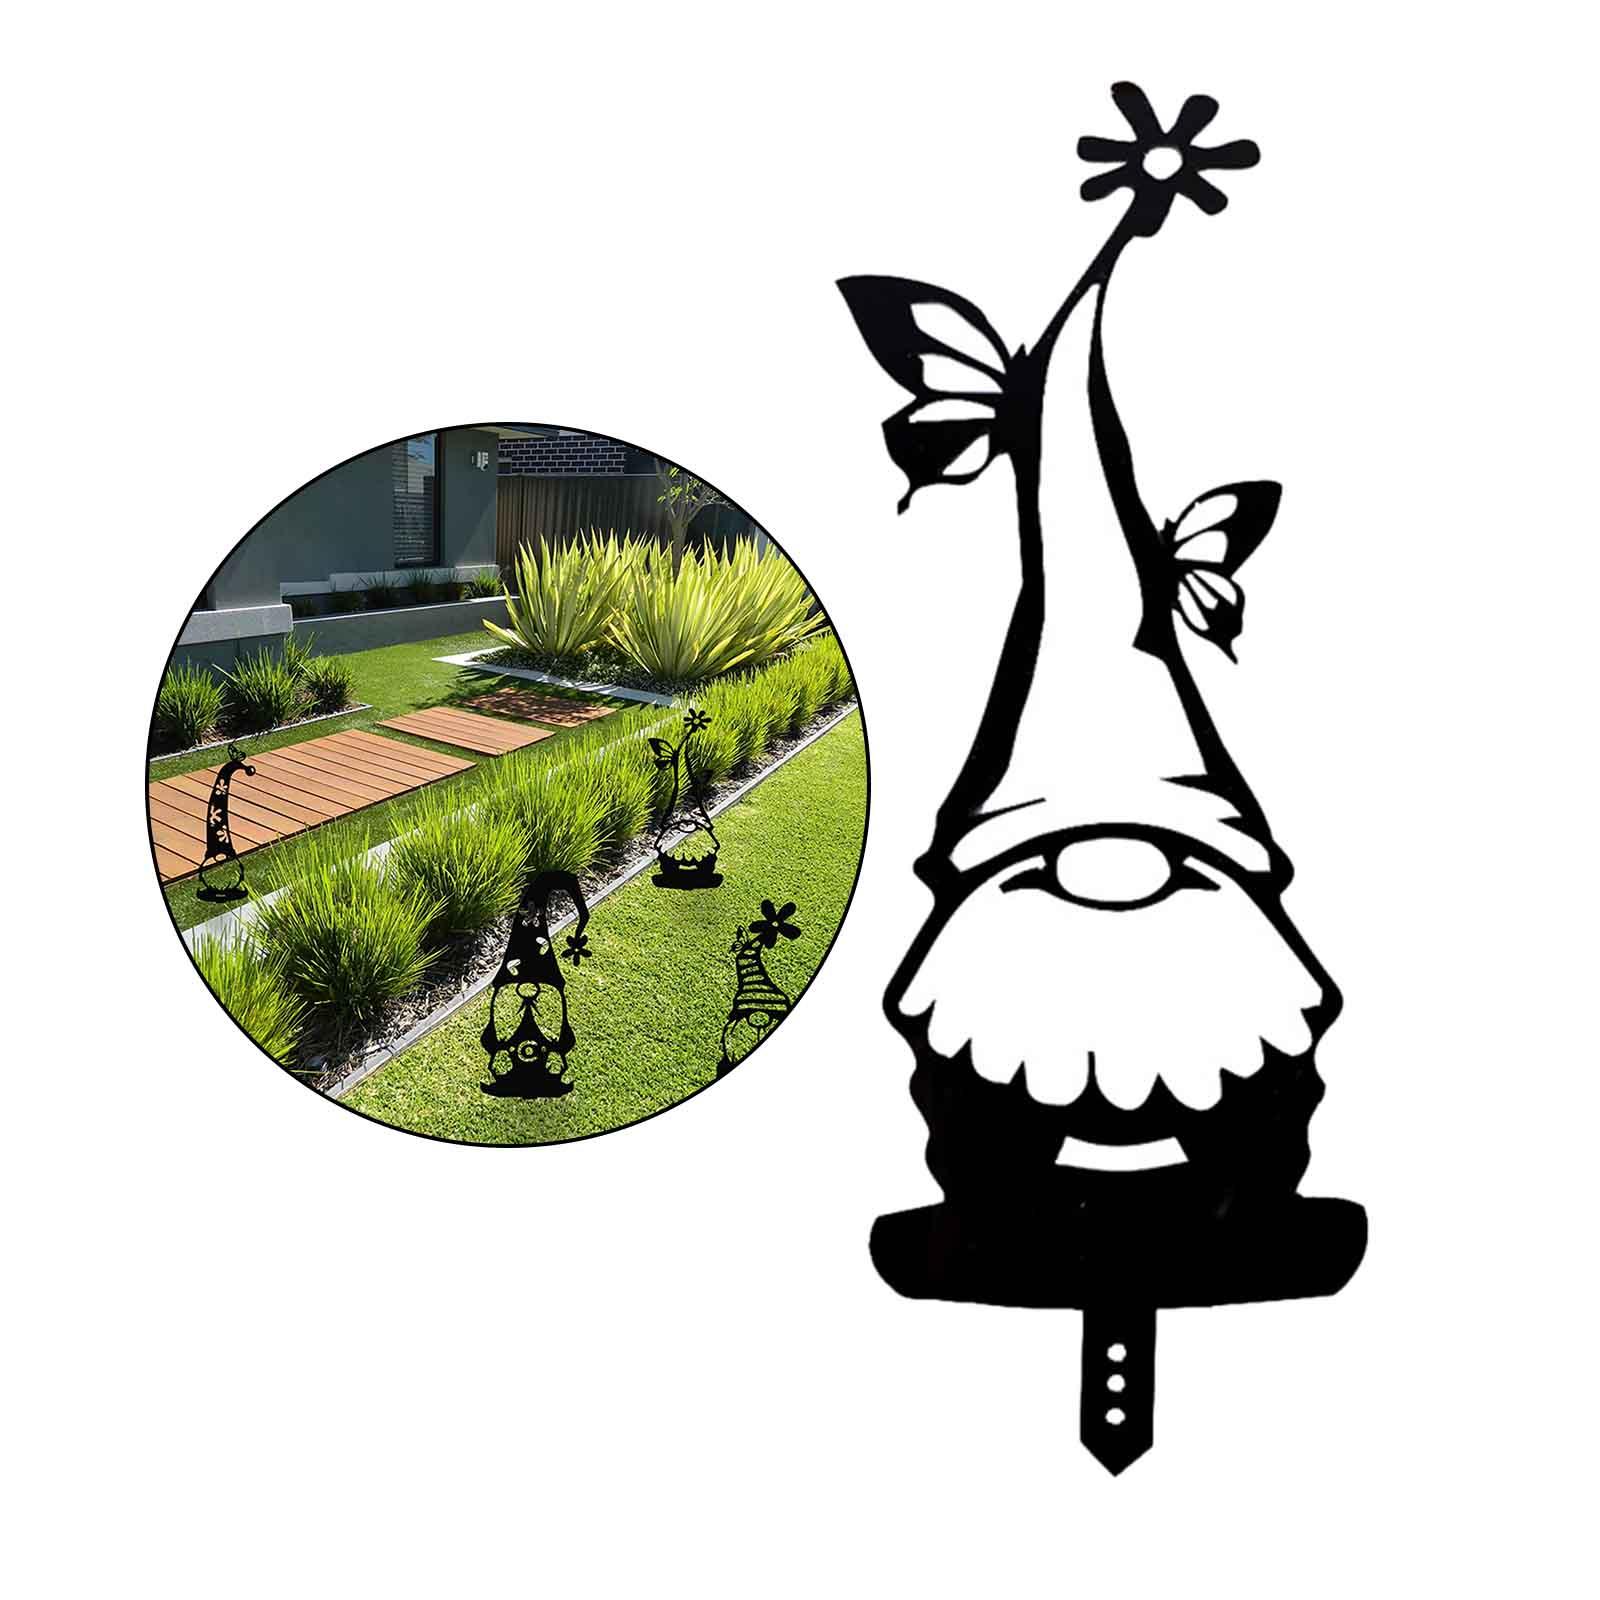 Gnome Garden Dwarfs Art Lawn Patio Statue House Stakes 12x30cm